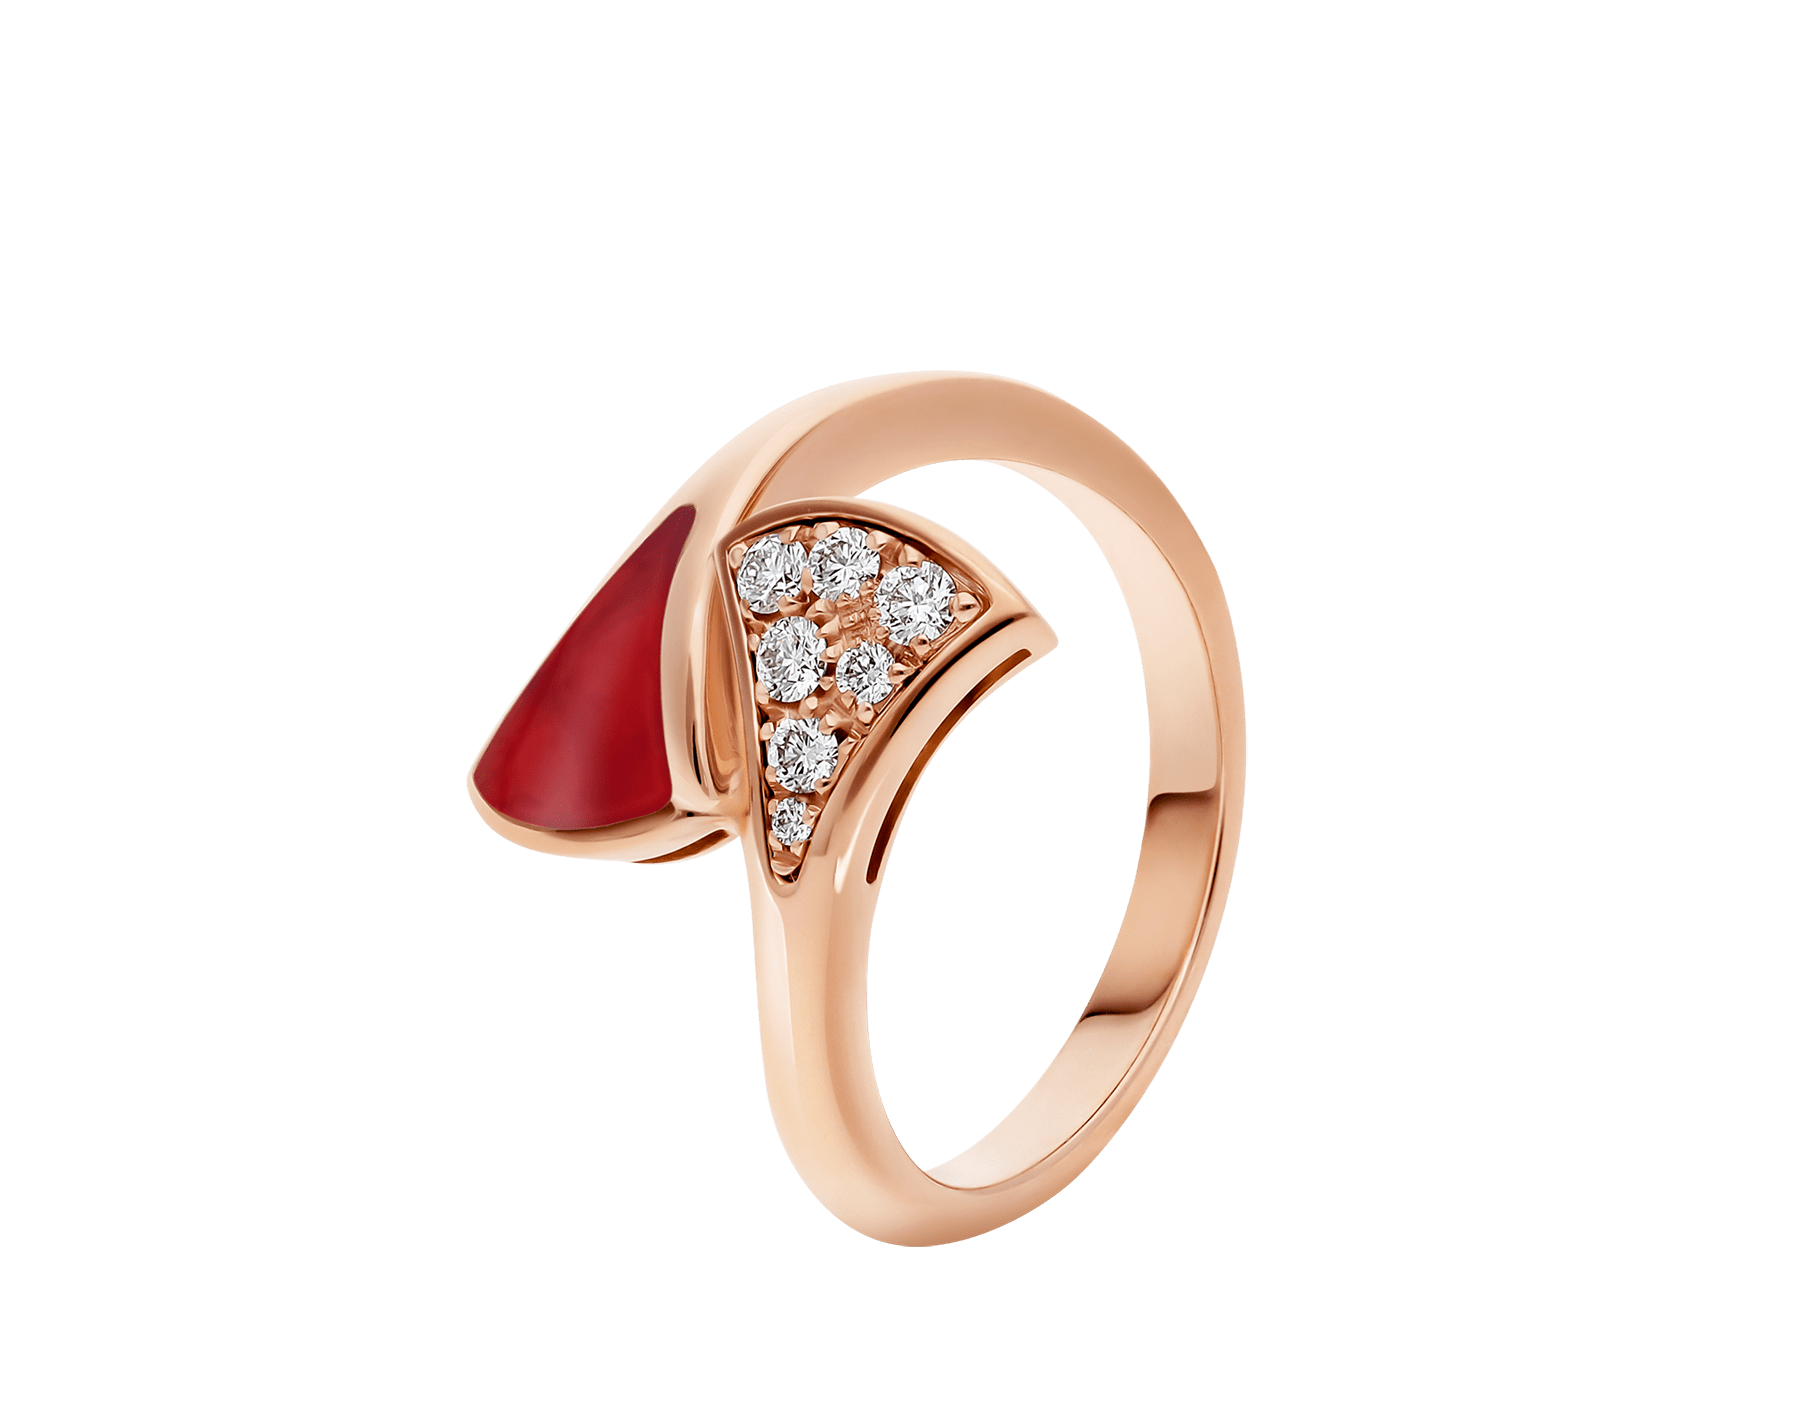 DIVAS' DREAM 18 kt rose gold ring set with carnelian element and pavé diamonds (0.10 ct) AN858645 image 1